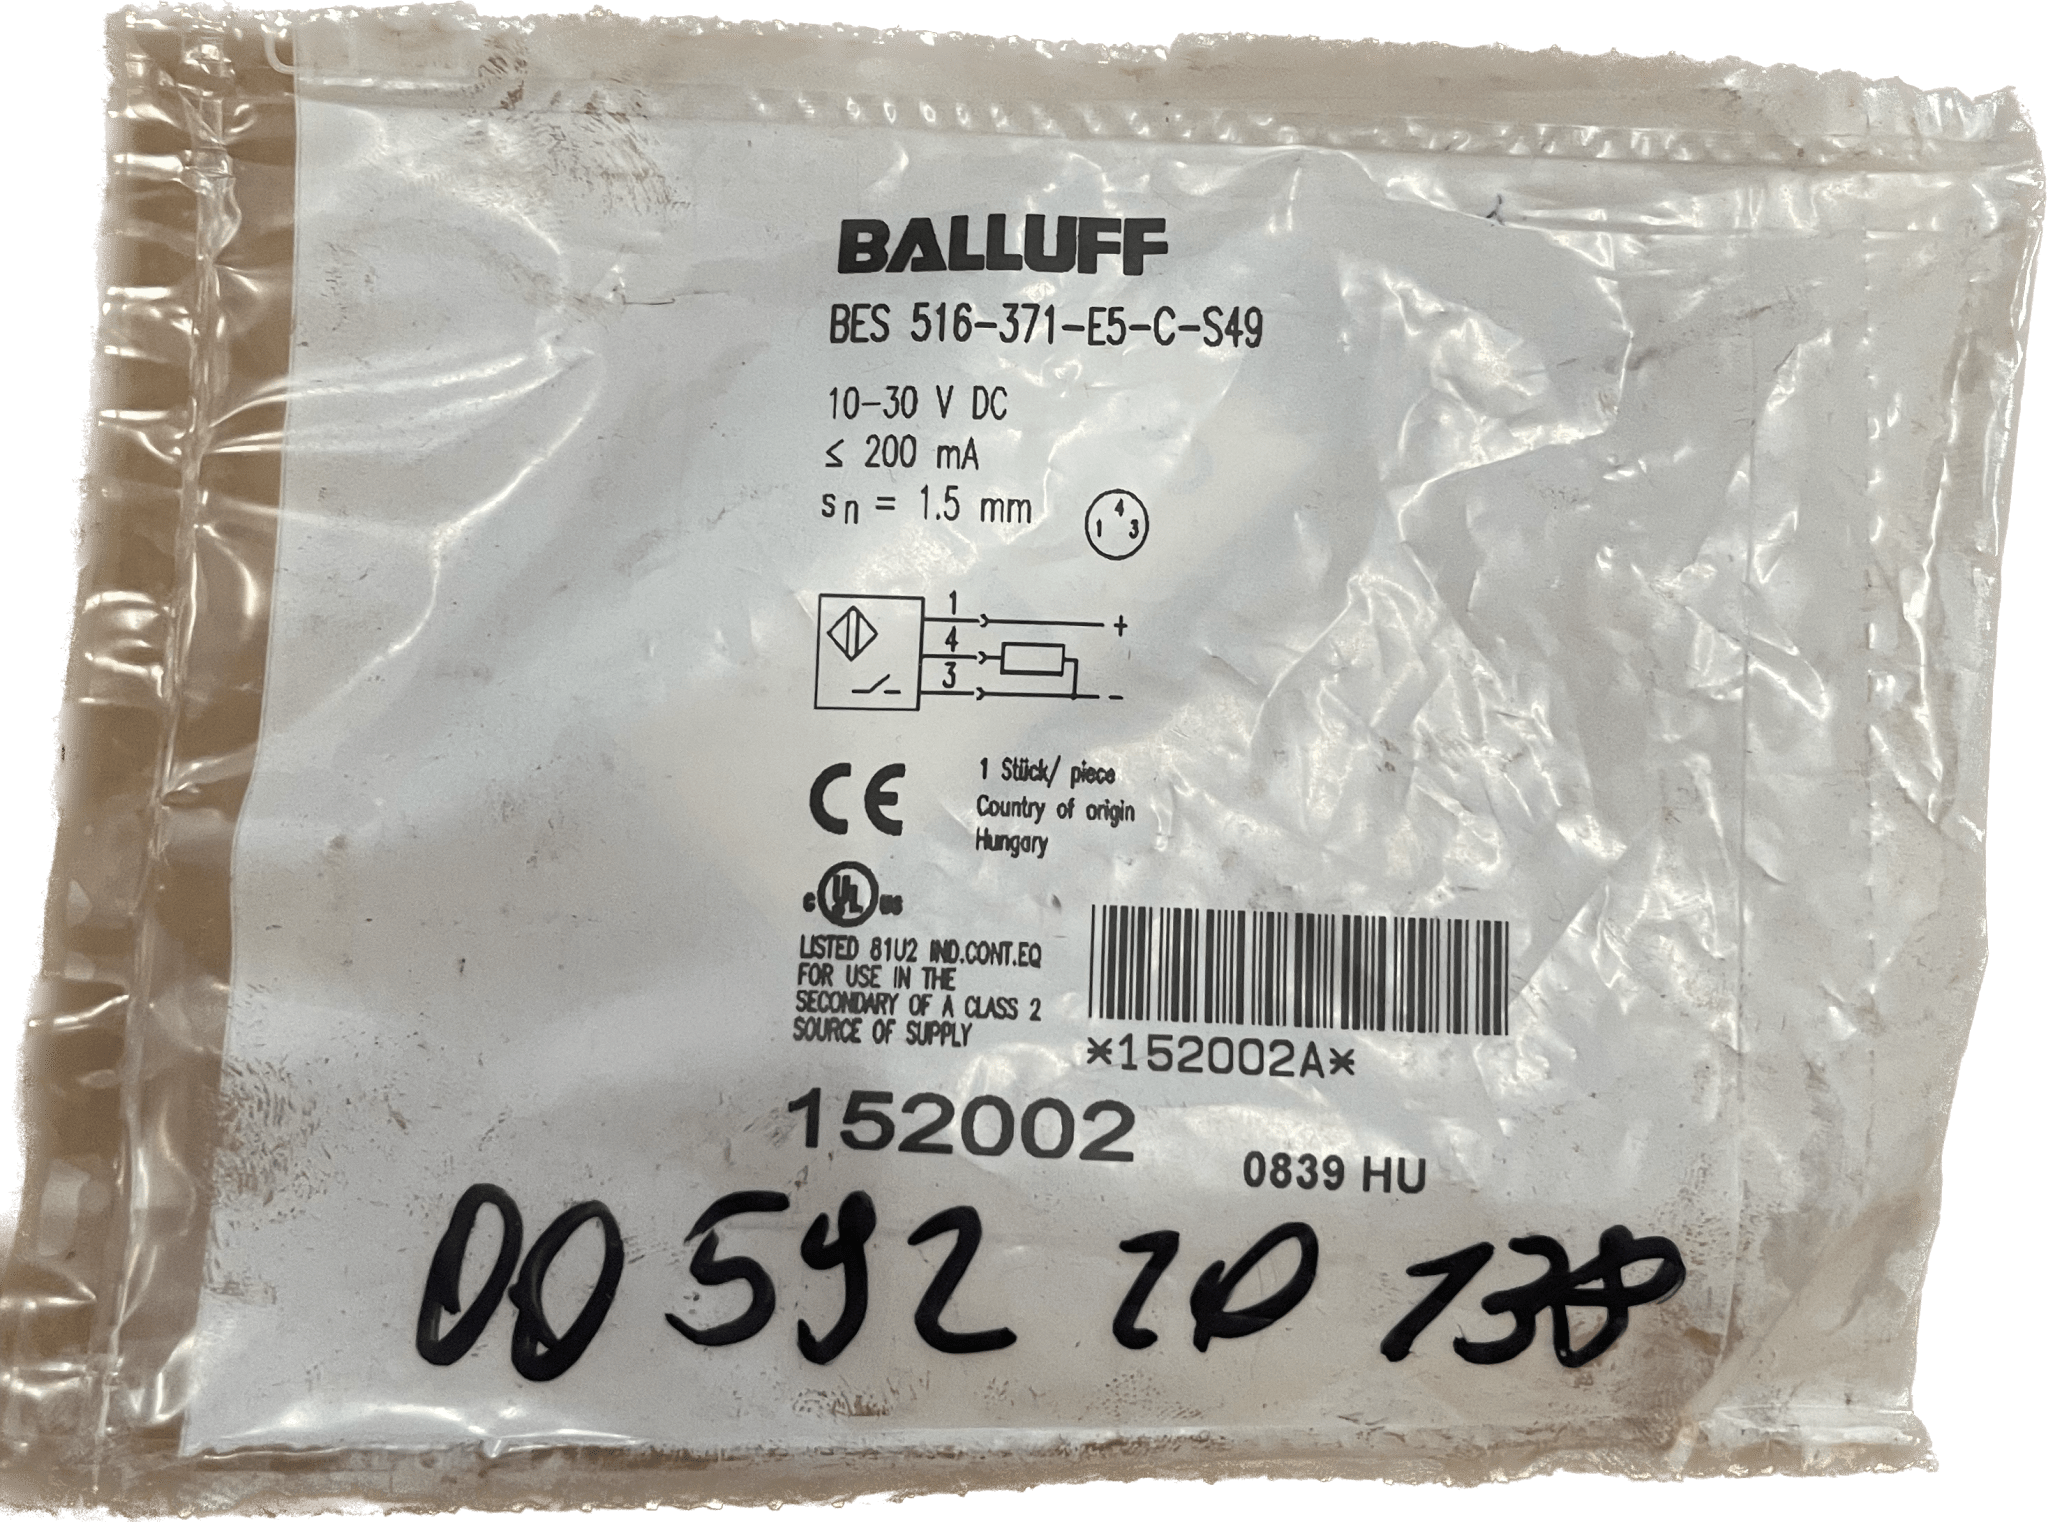 BALLUFF Induktive Standardsensoren mit Vorzugstypen BES 516-371-E5-C-S49 - #product_category# | Klenk Maschinenhandel